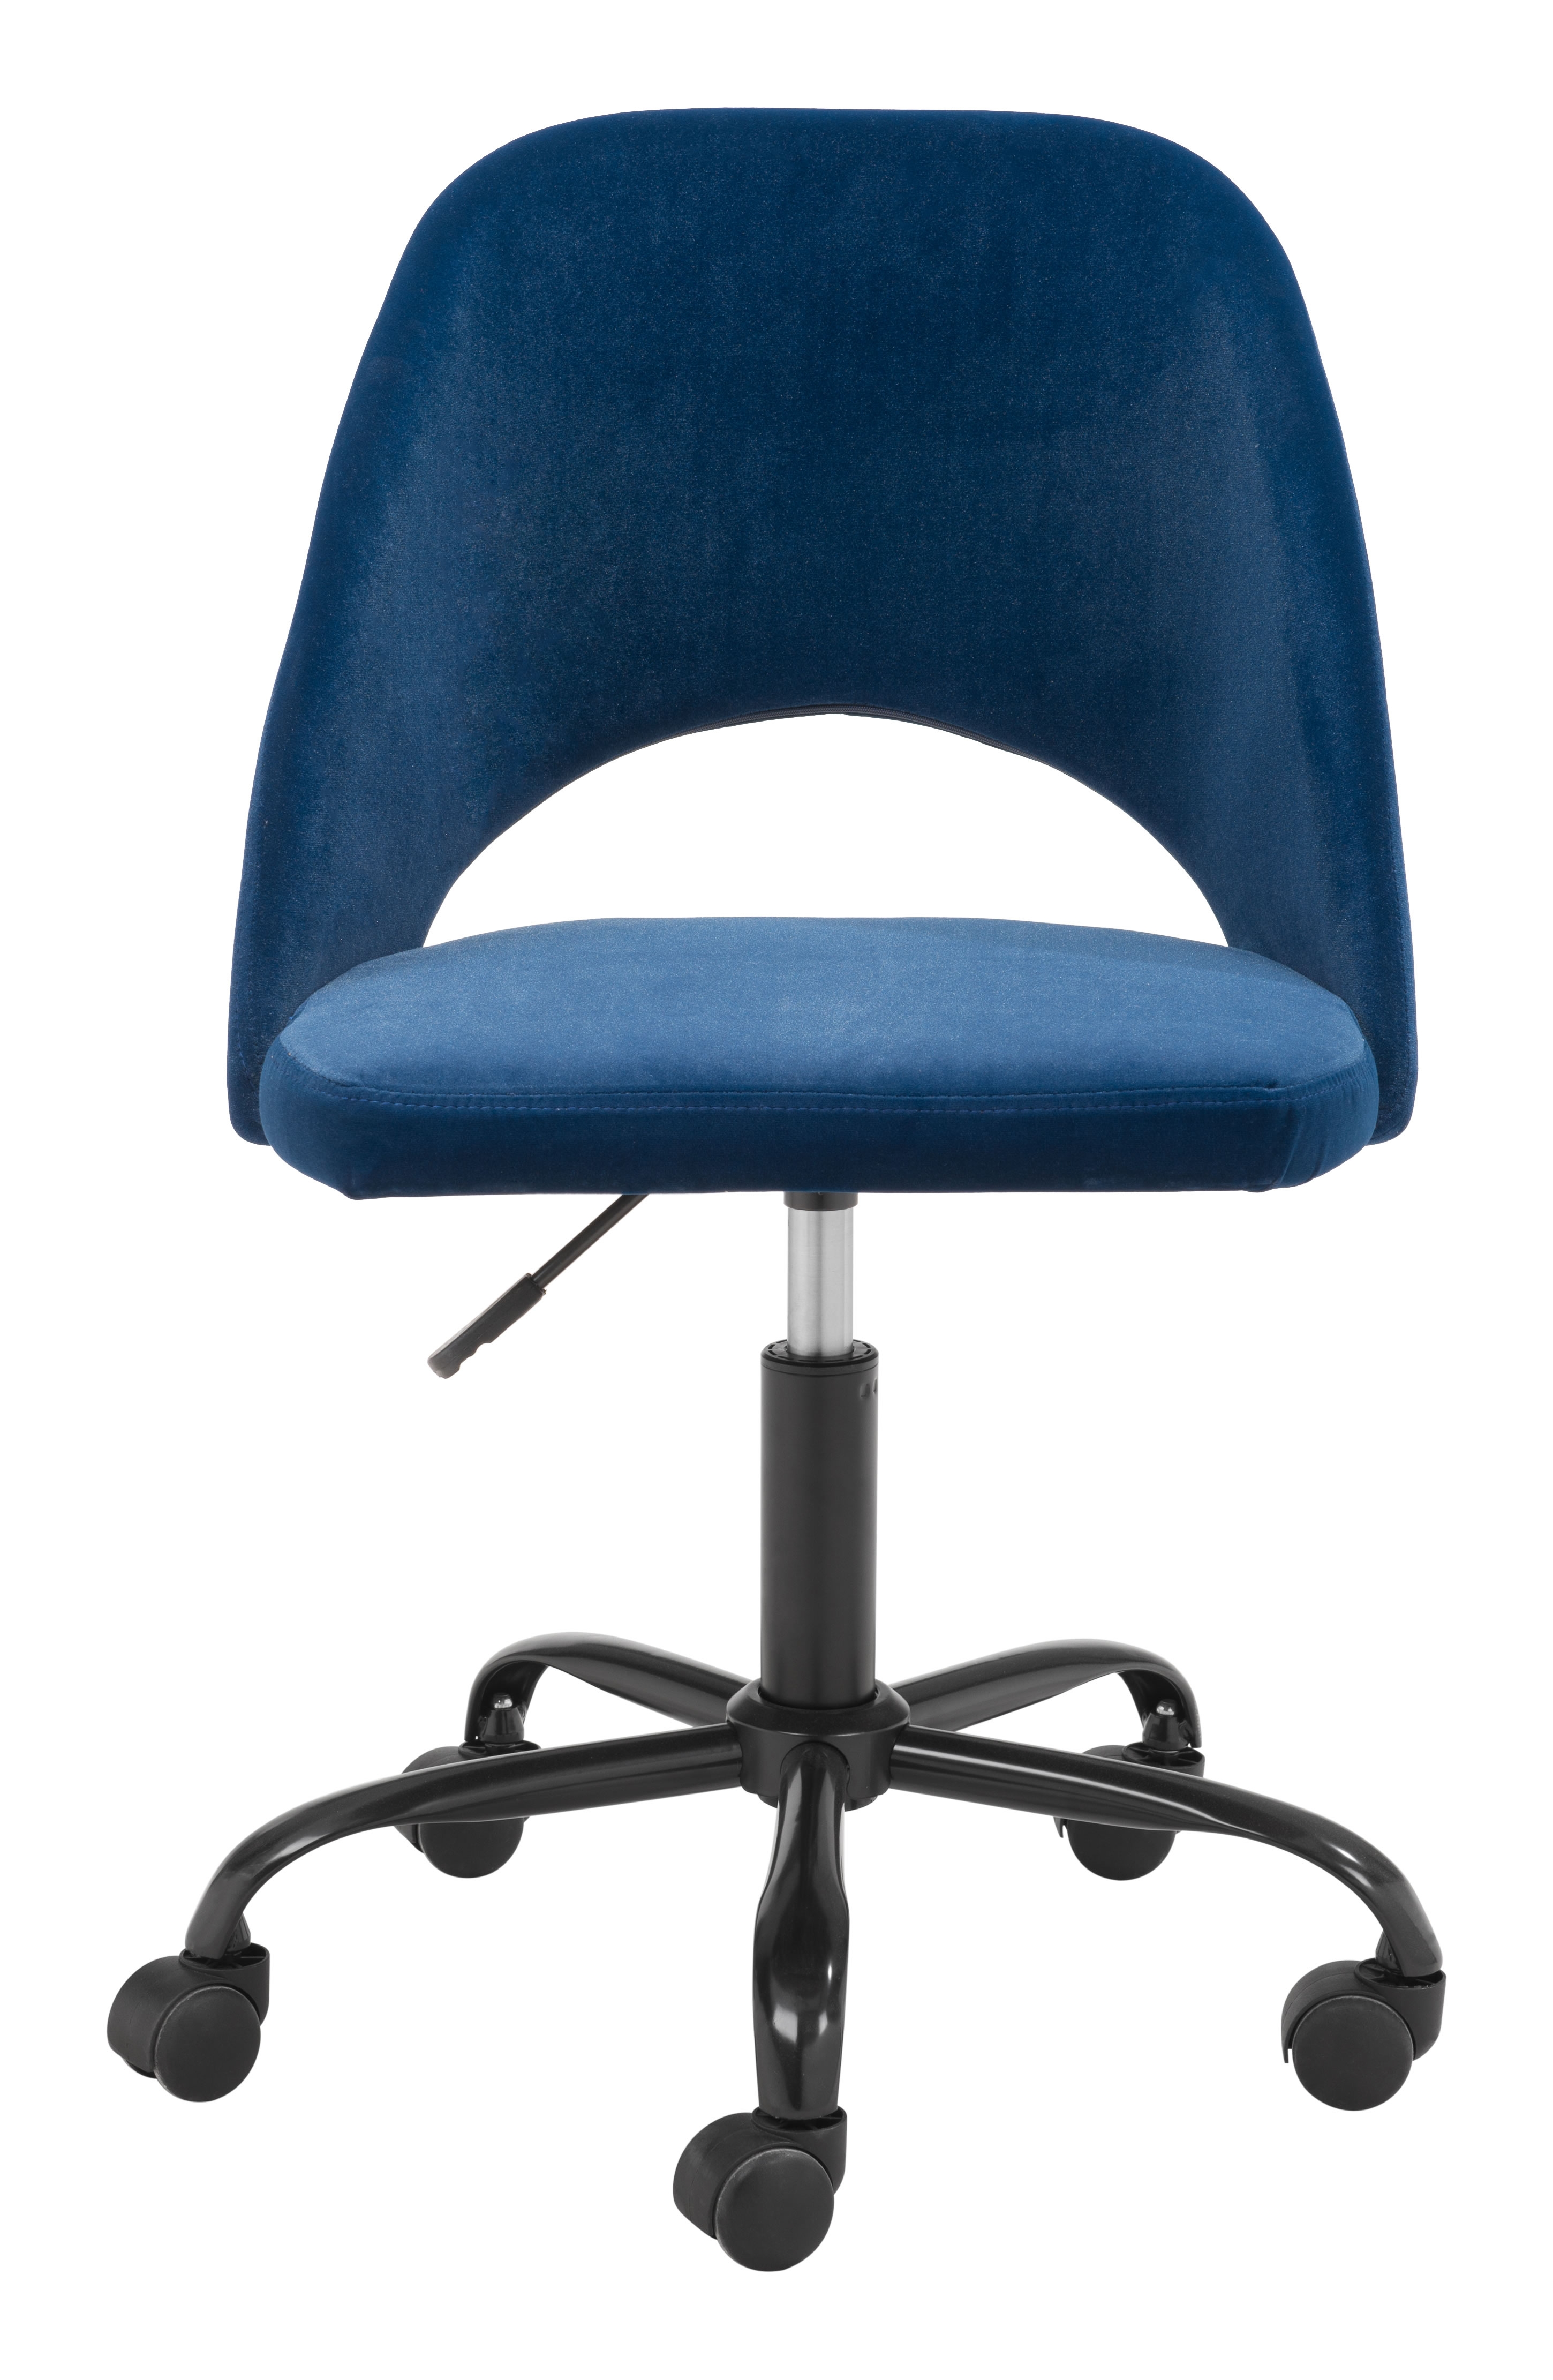 Treibh Office Chair, Navy Blue - Image 5